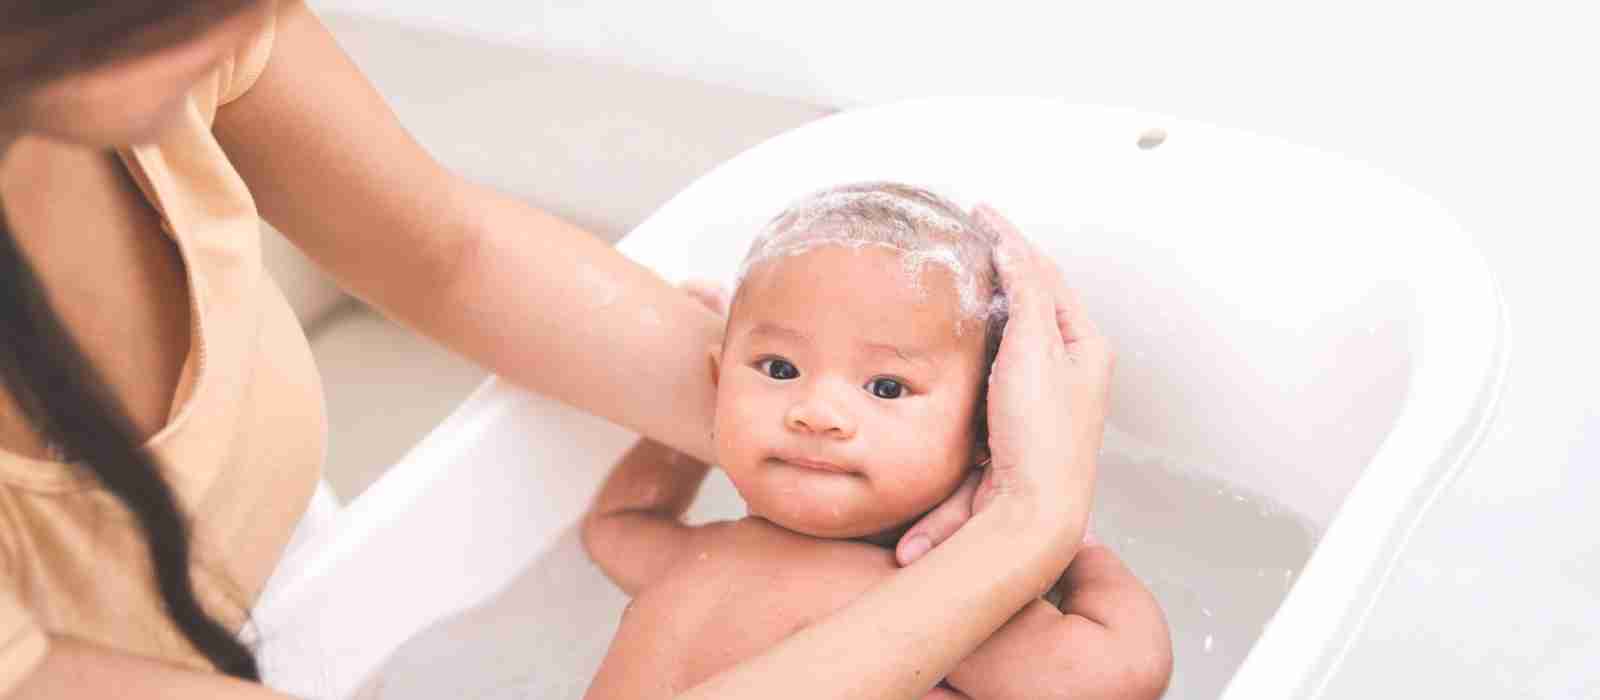 Are baths good or bad for diaper rash